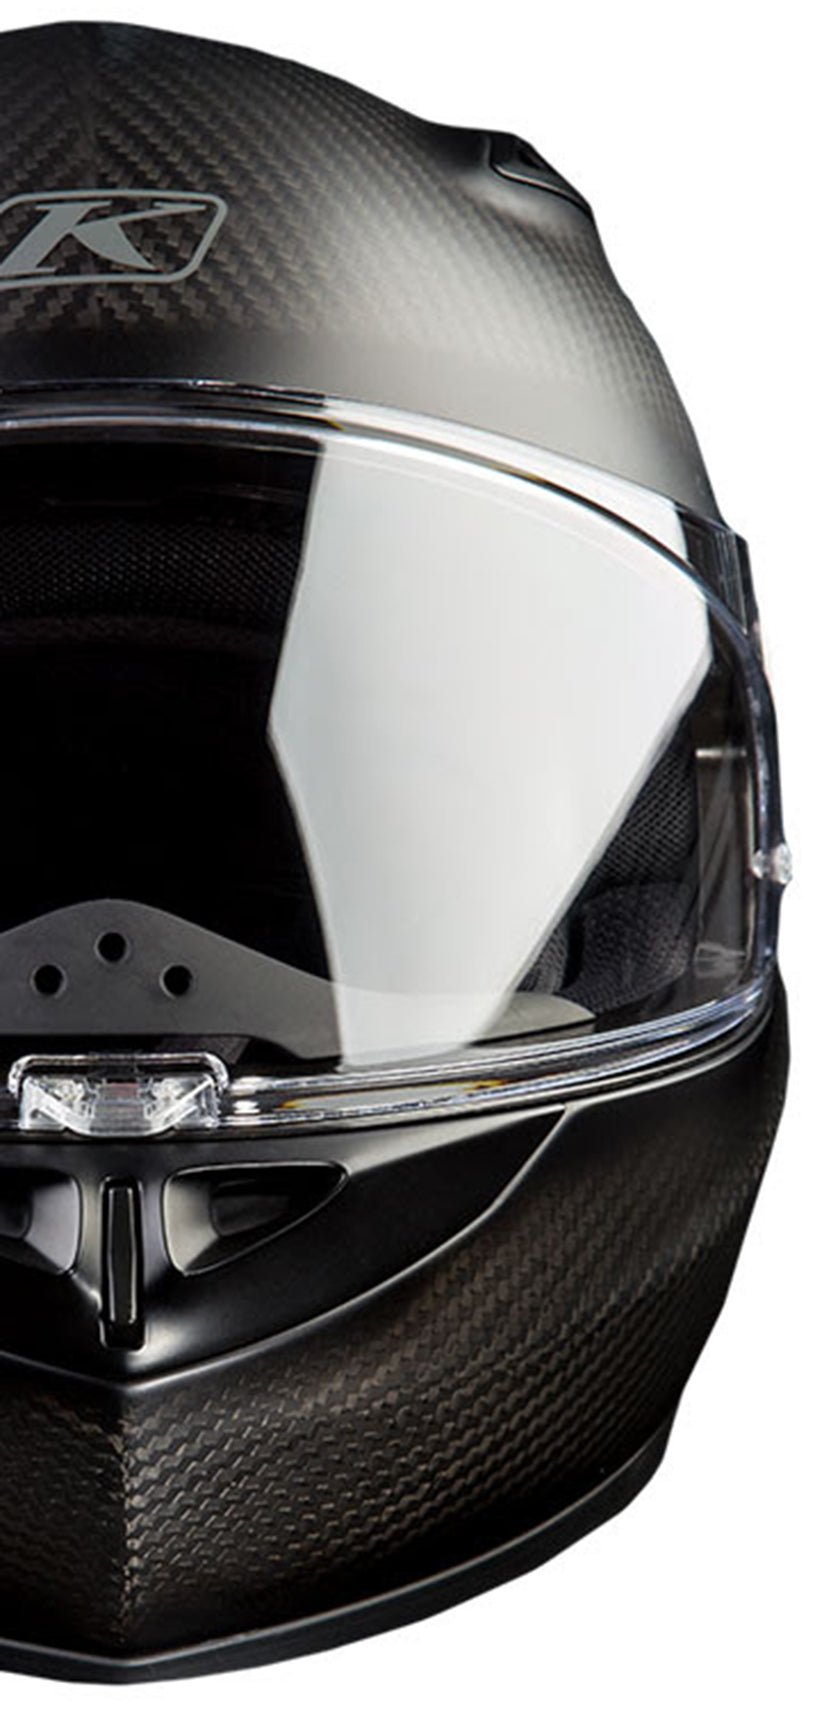 KLIM Motorcycle Helmets | 30 Day Money Back Guarantee